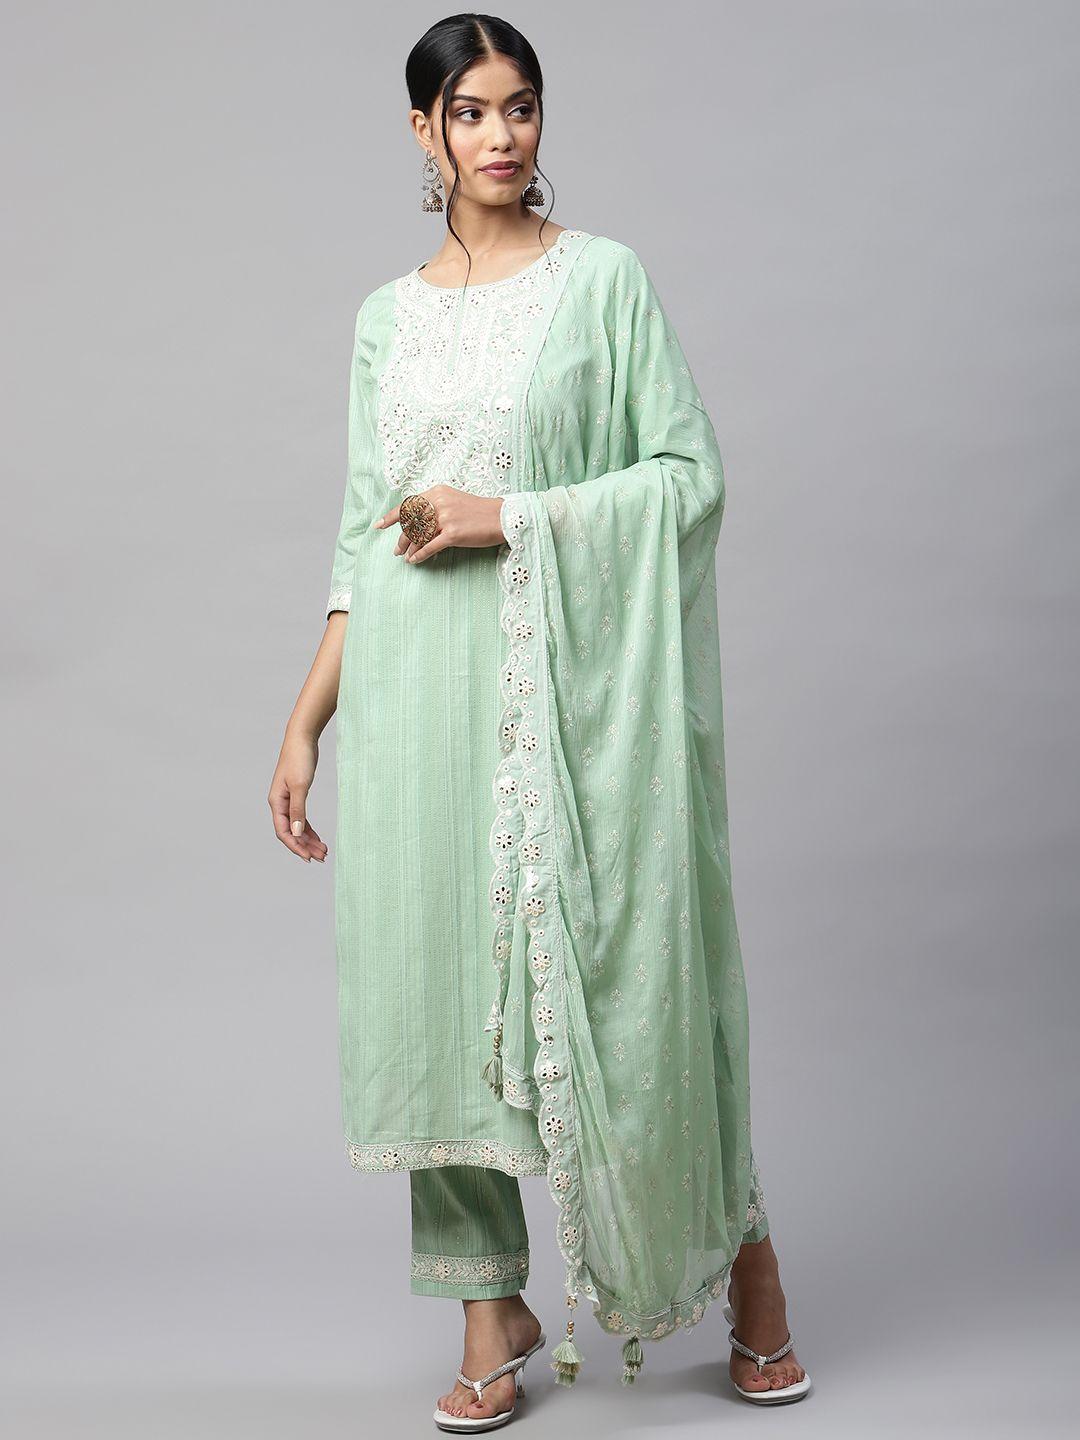 readiprint fashions women green floral embroidered cotton kurta with palazzos & dupatta